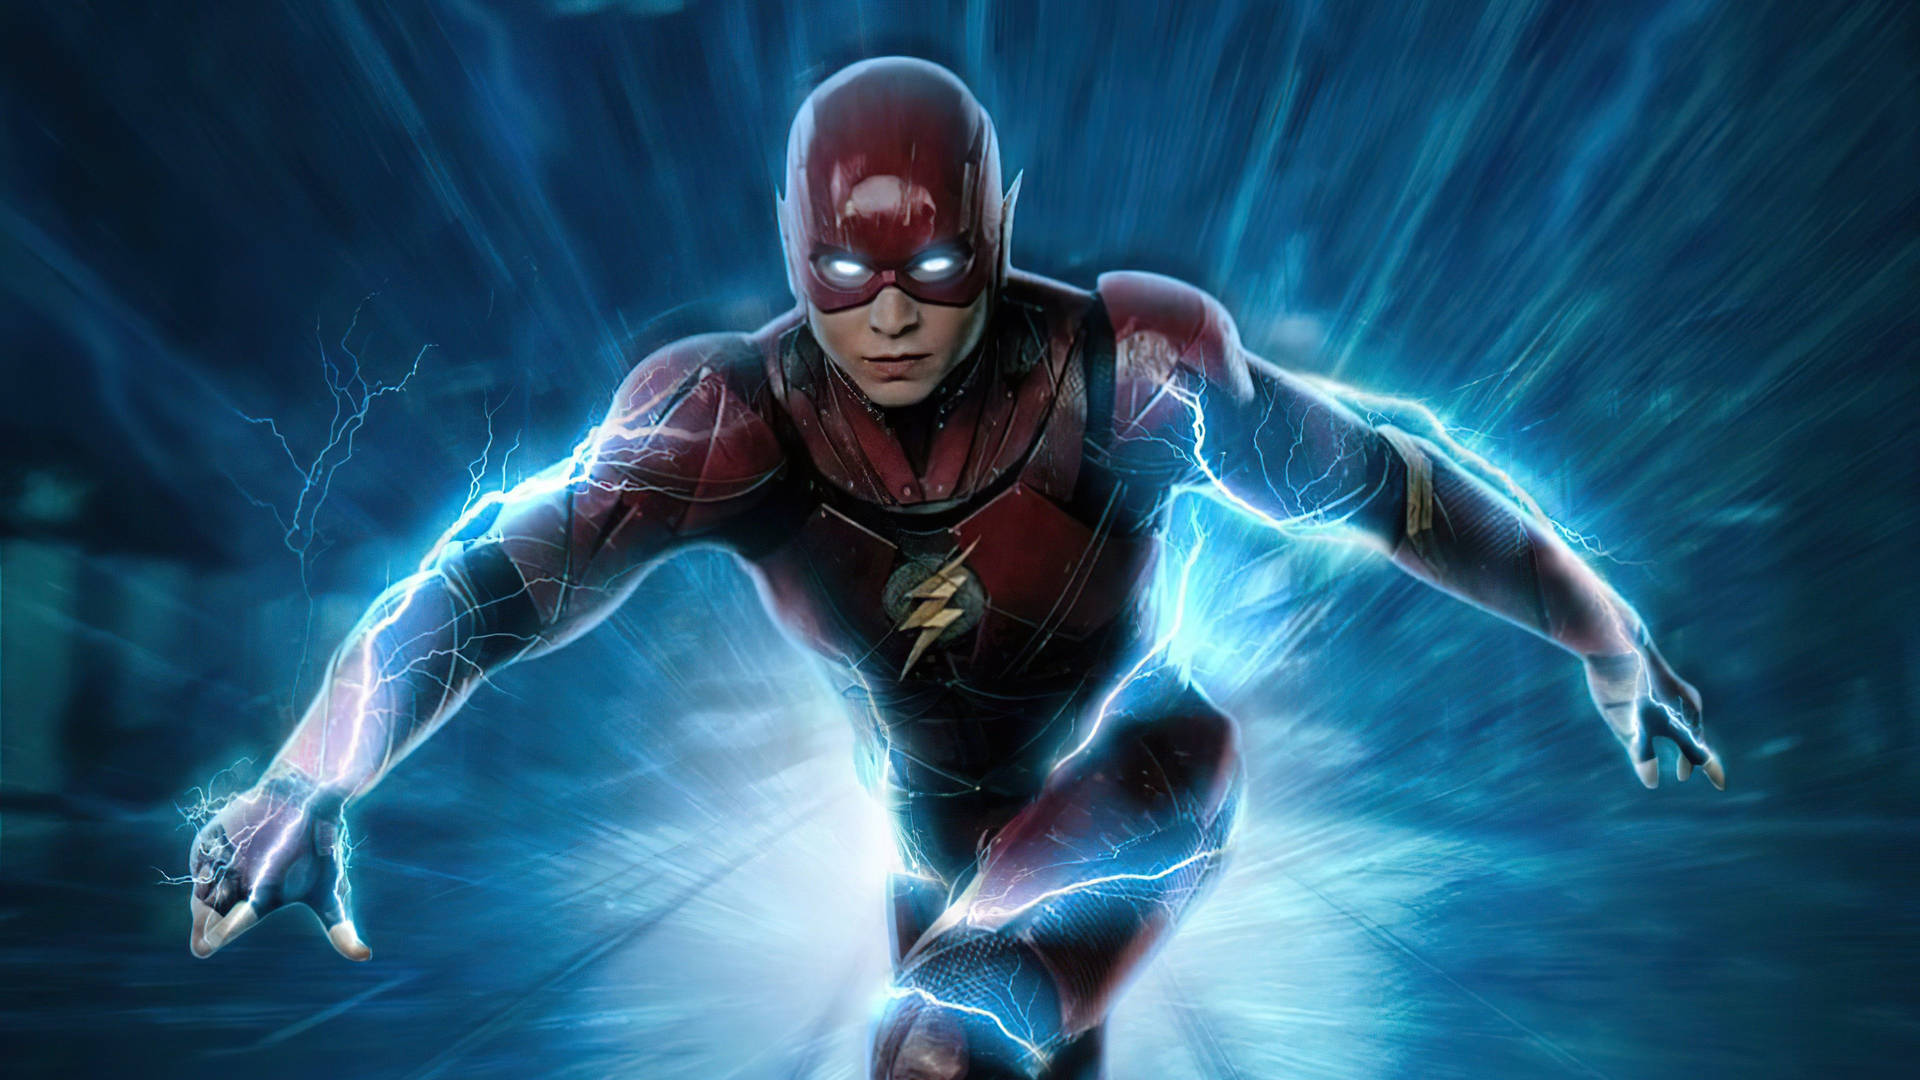 Ezra Miller The Flash Movie Poster Wallpaper